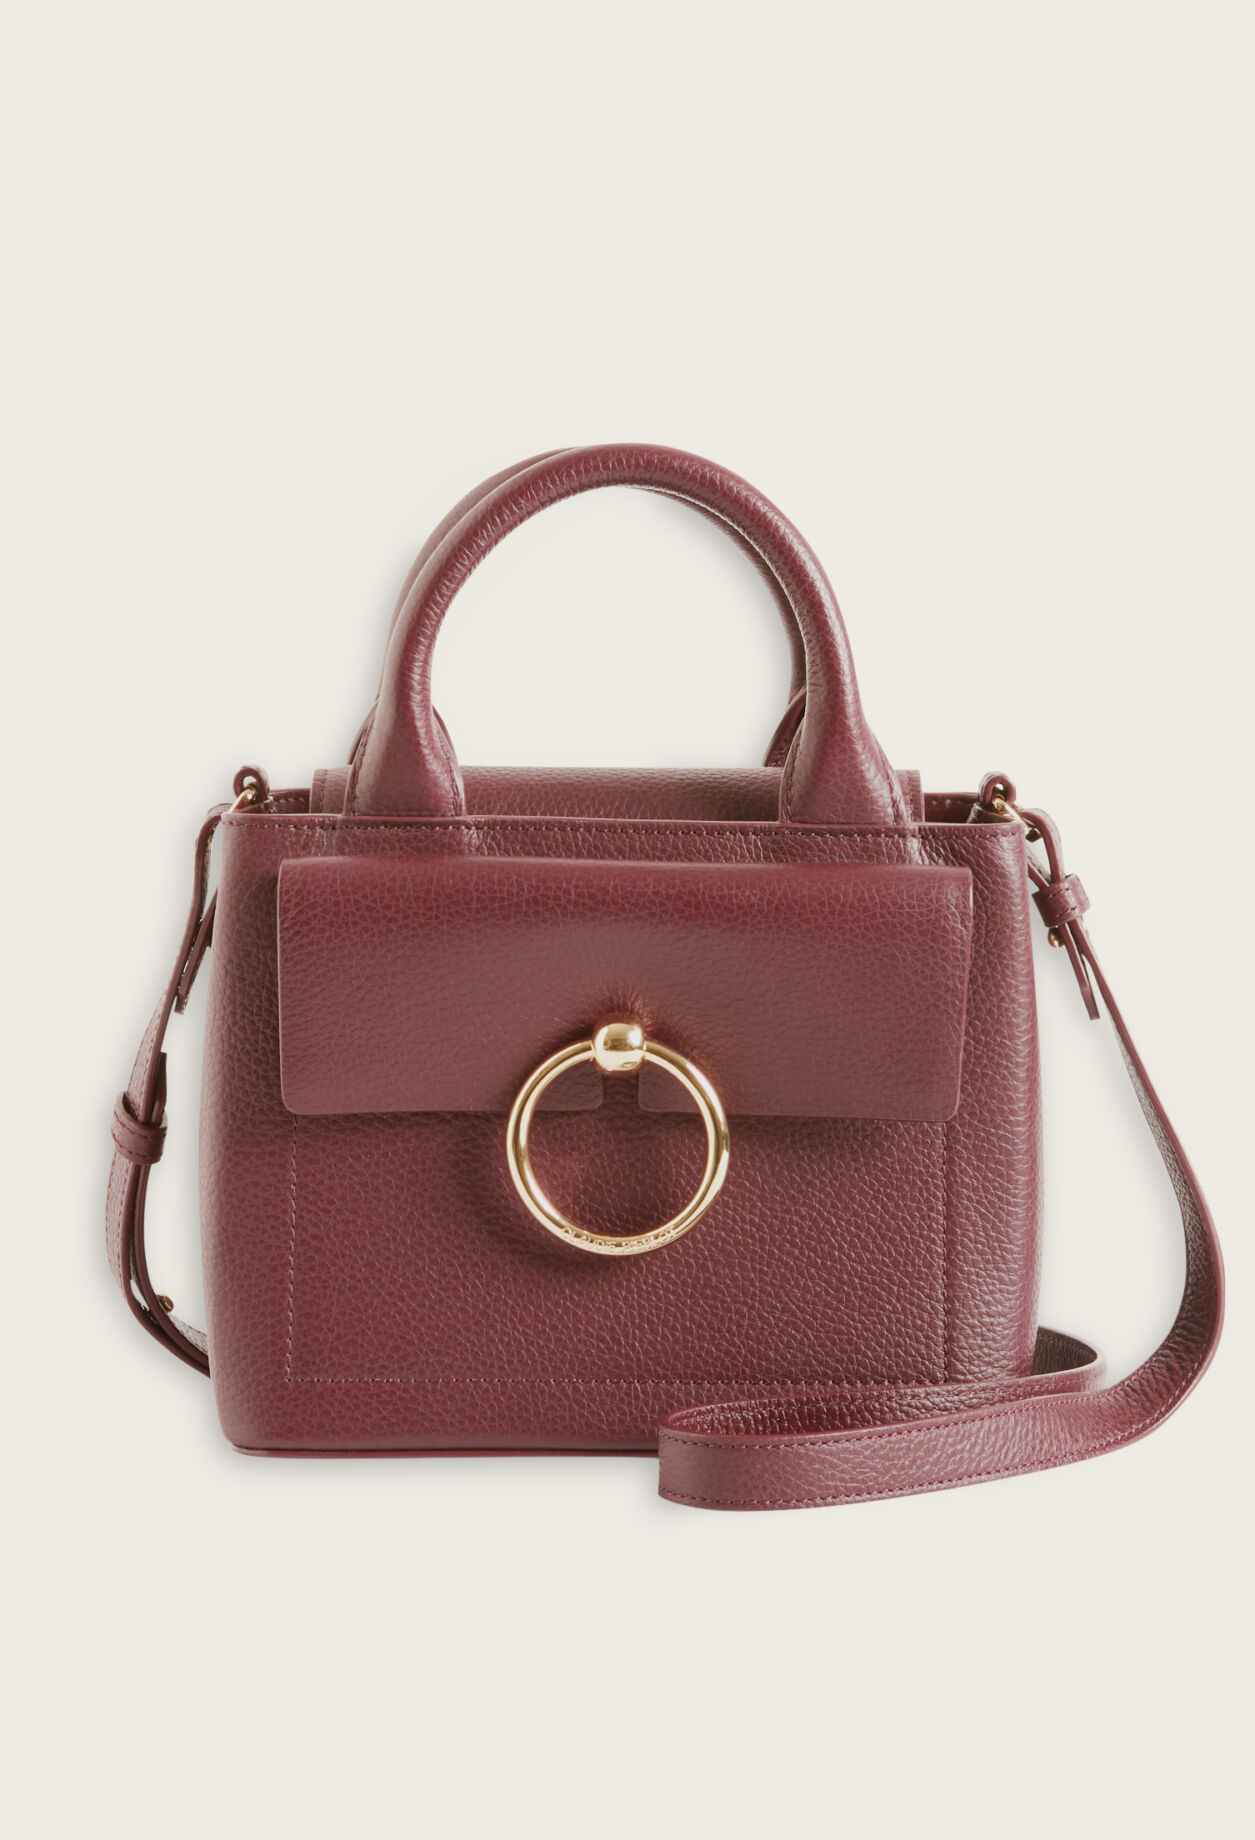 Anouck burgundy leather bag